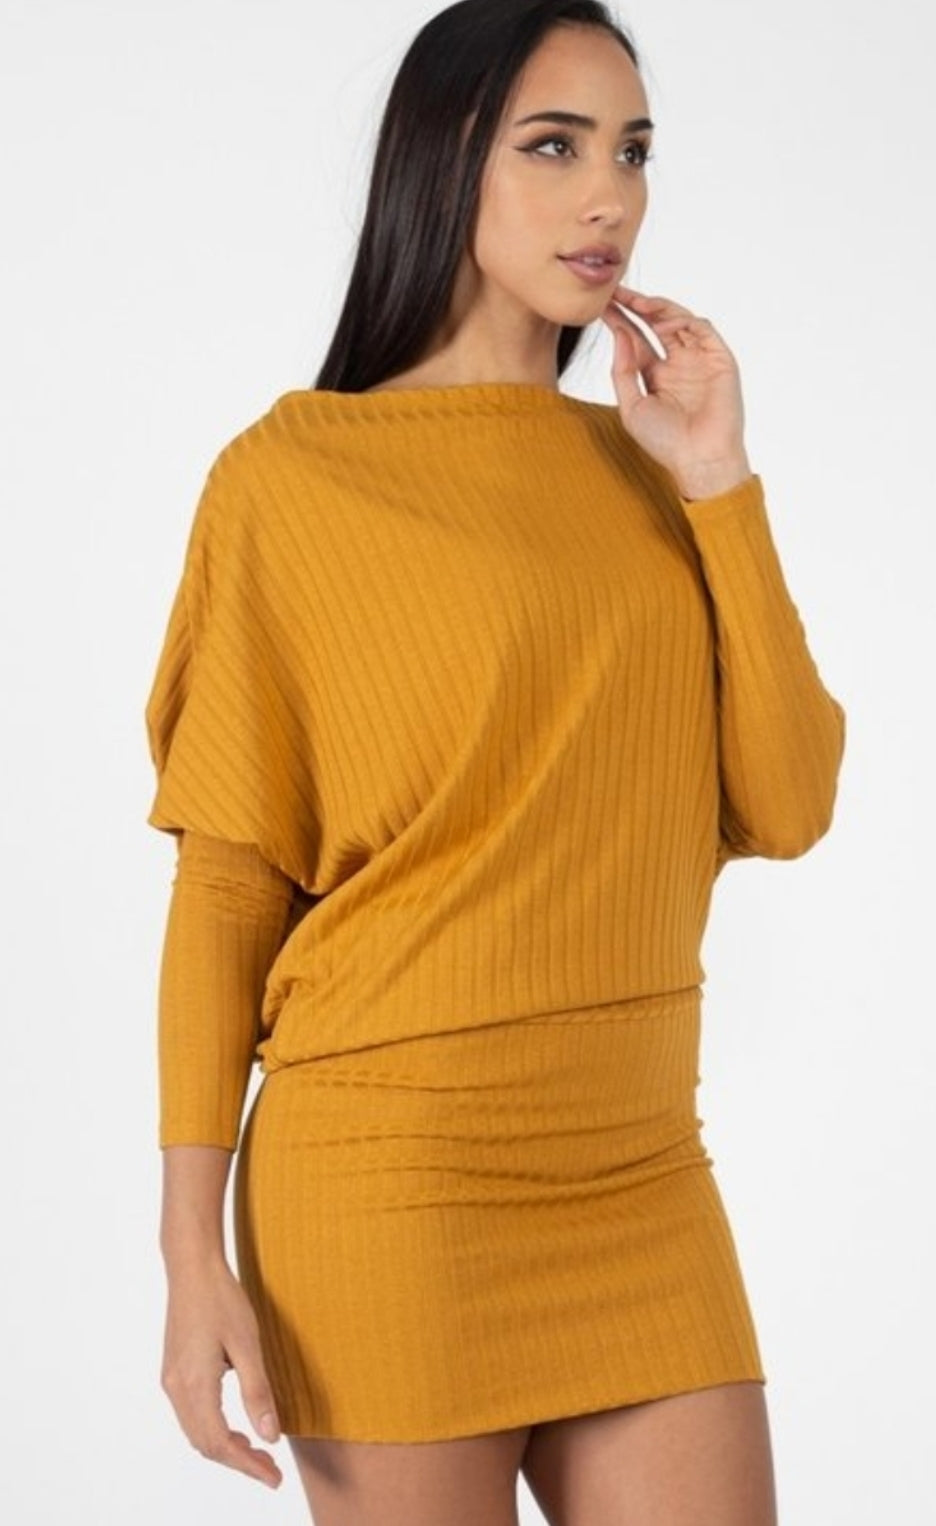 Blouson Sweater Mustard Dress